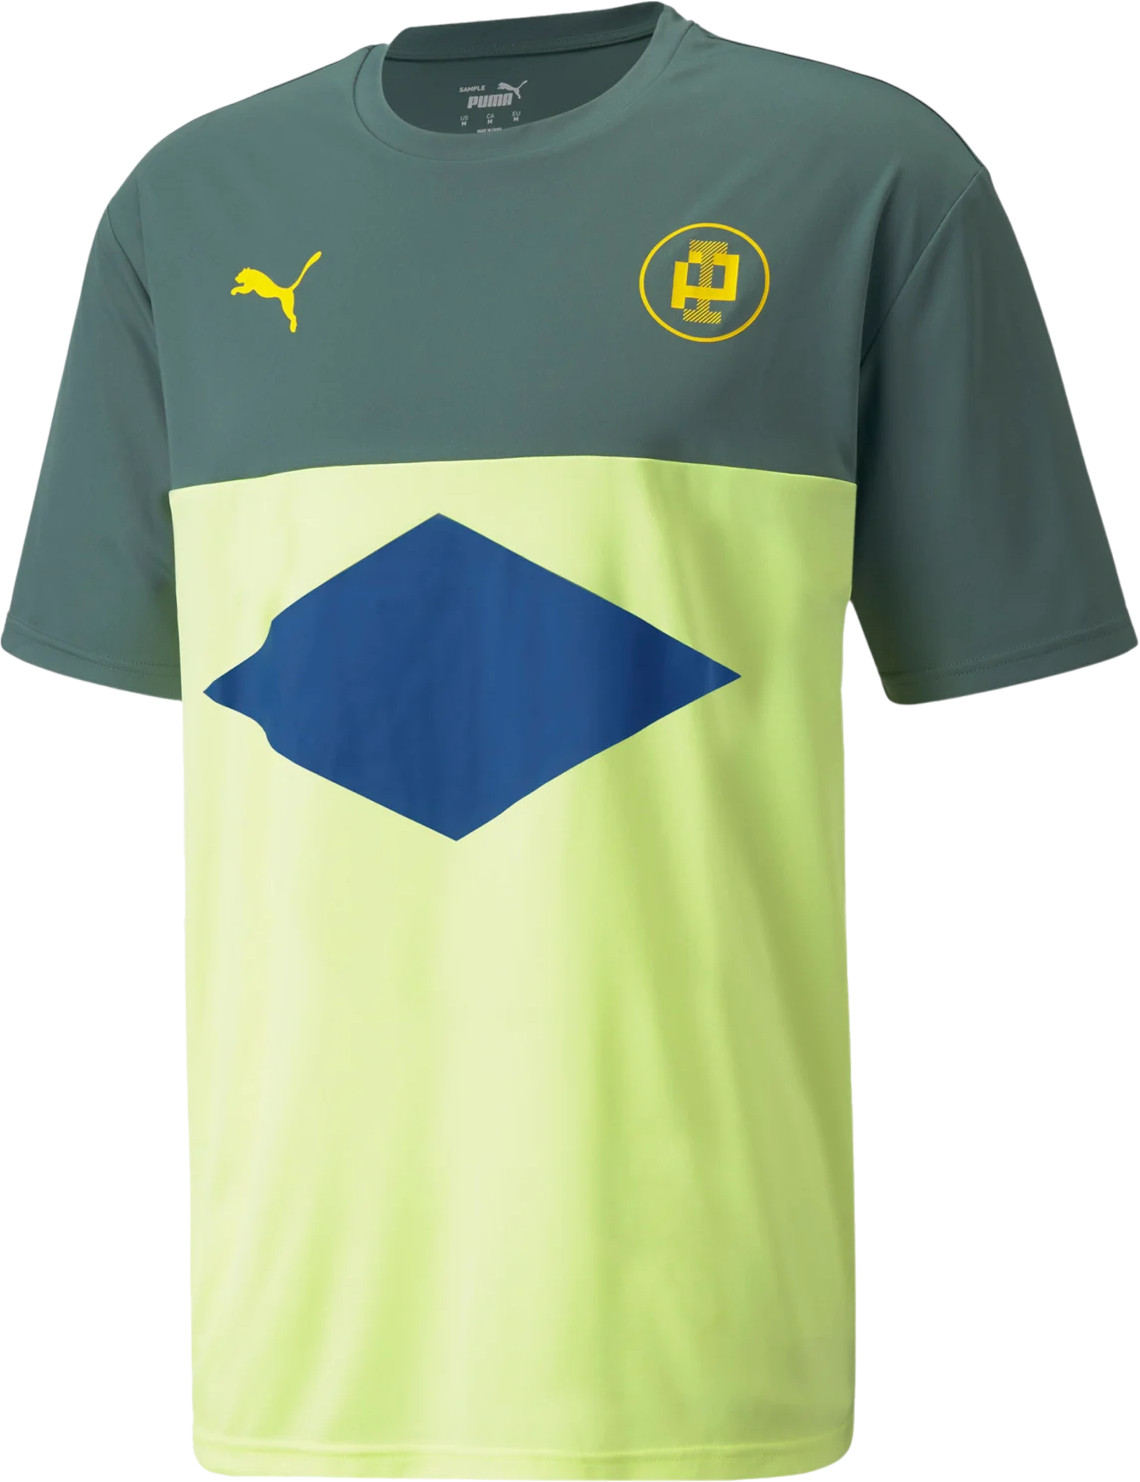 T-shirt Puma FUßBALL Tee 60s